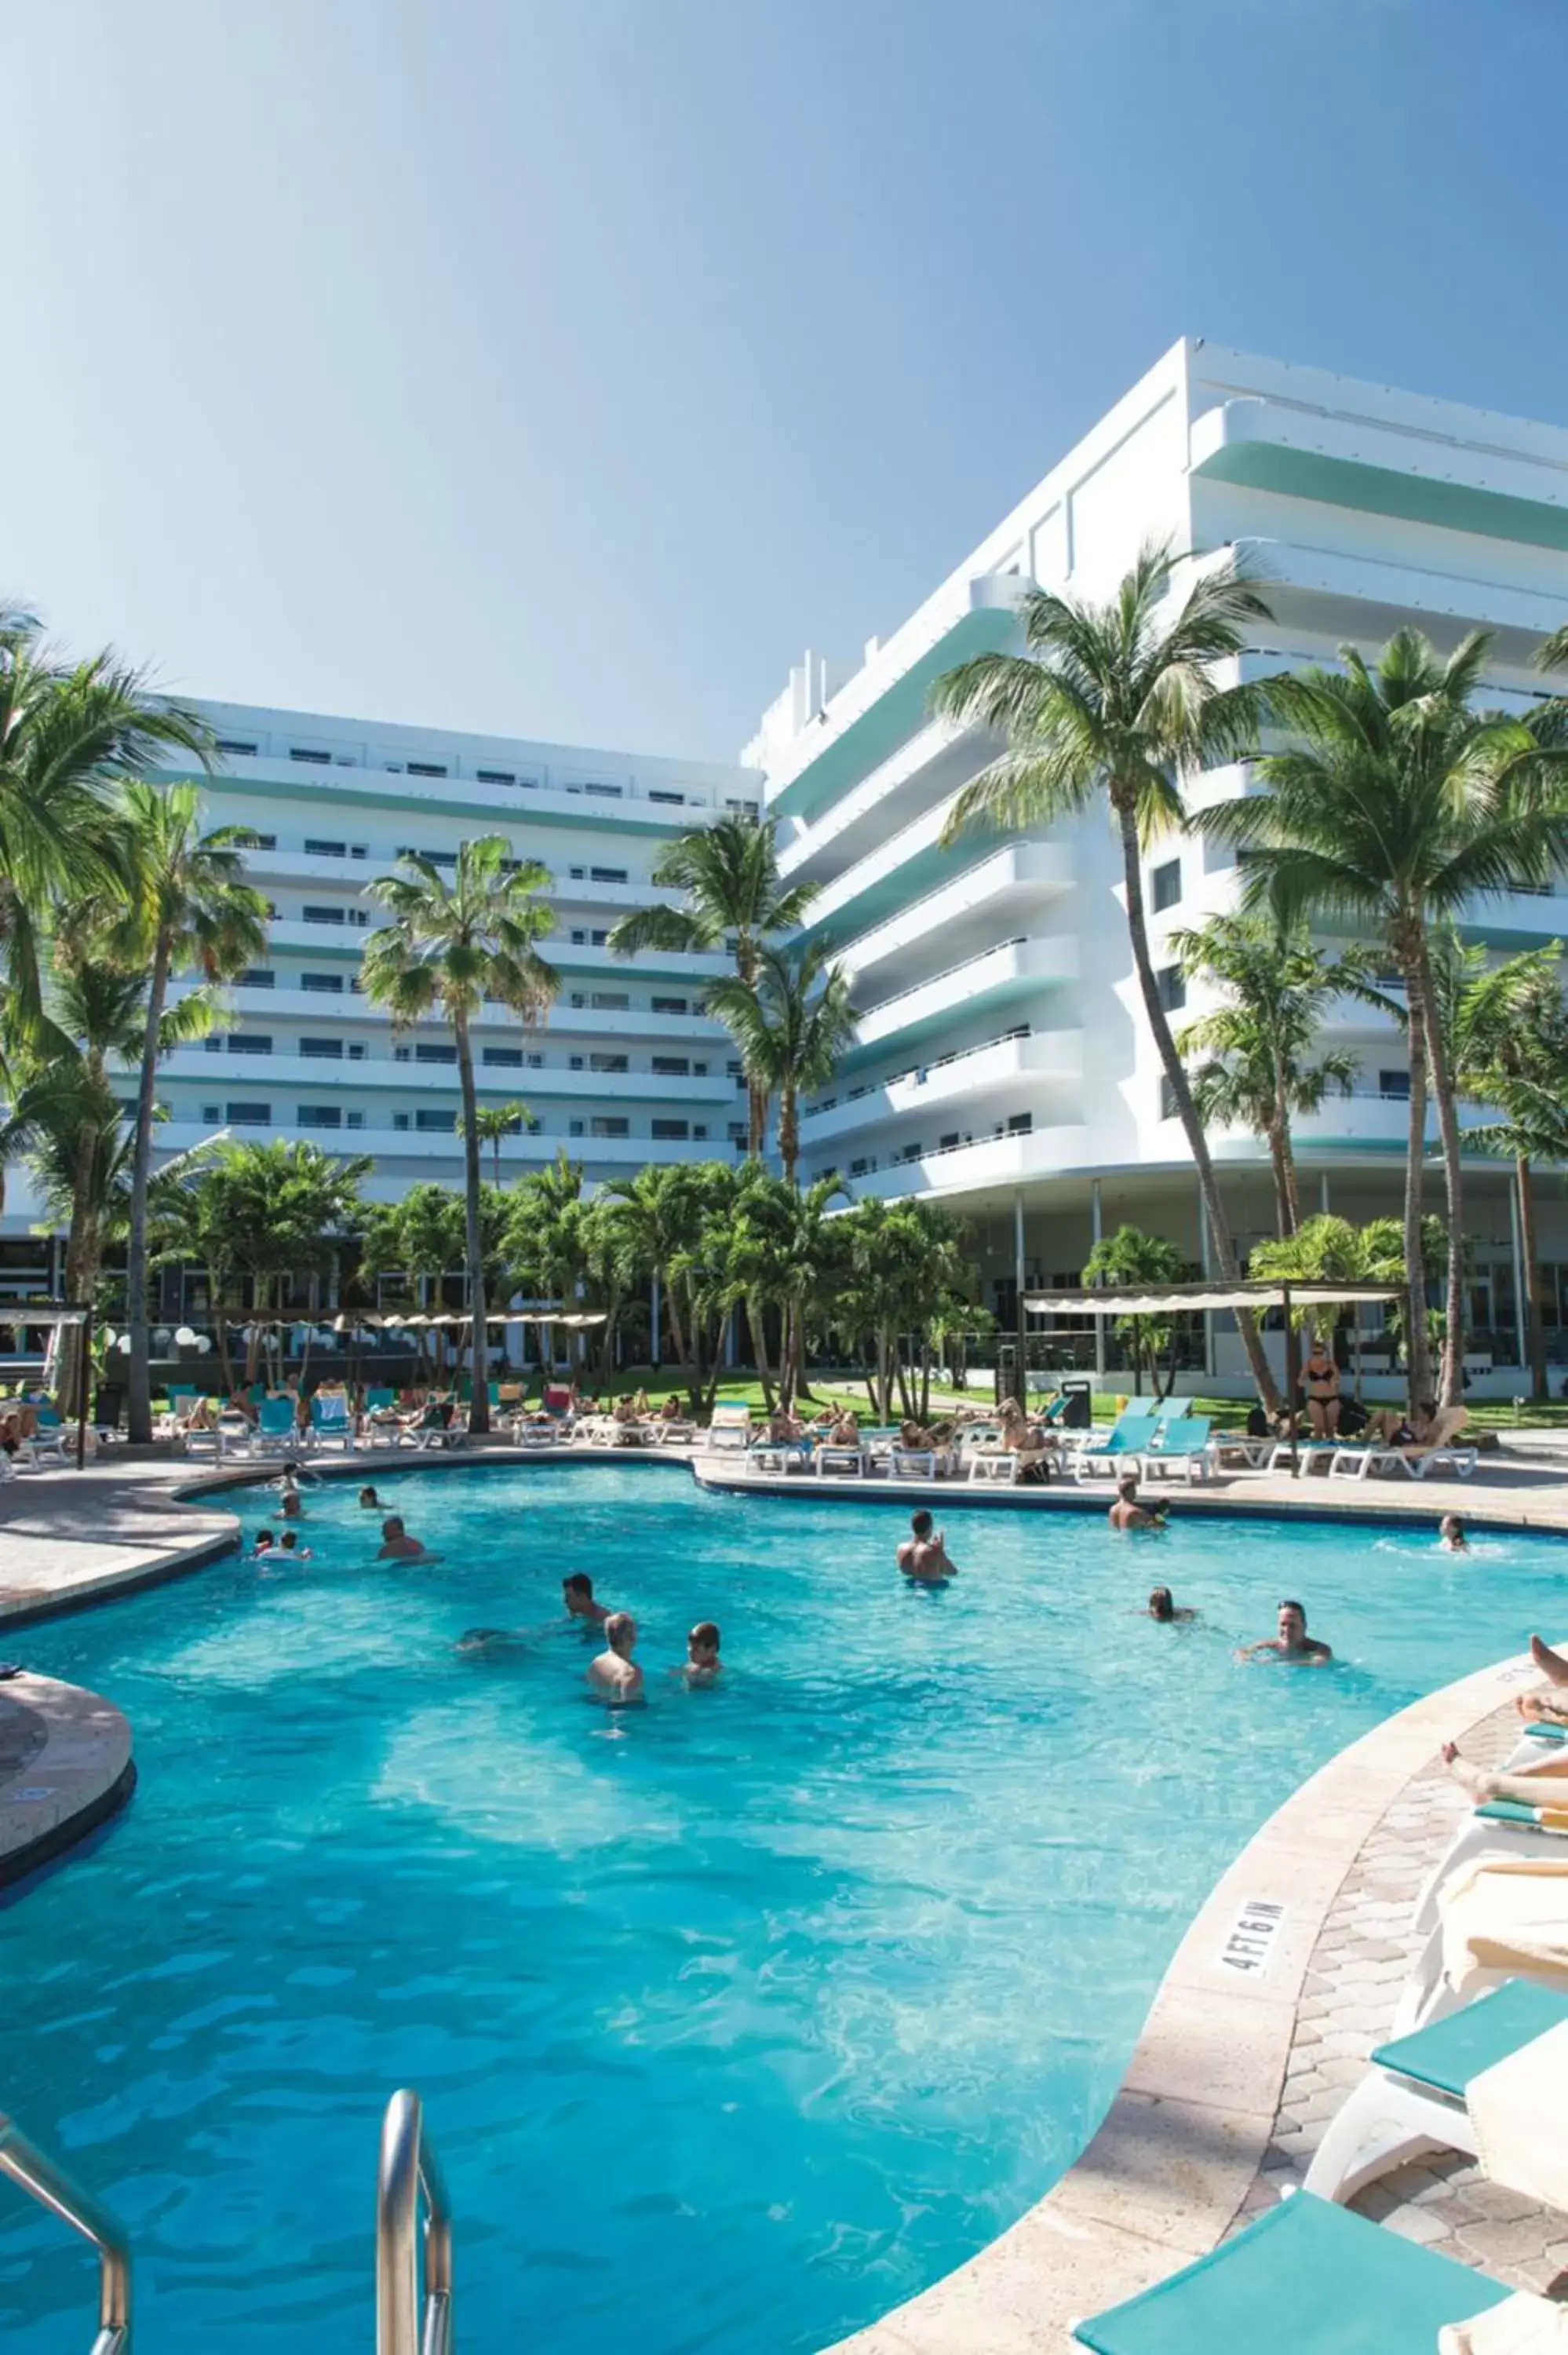 Swimming Pool in Riu Plaza Miami Beach